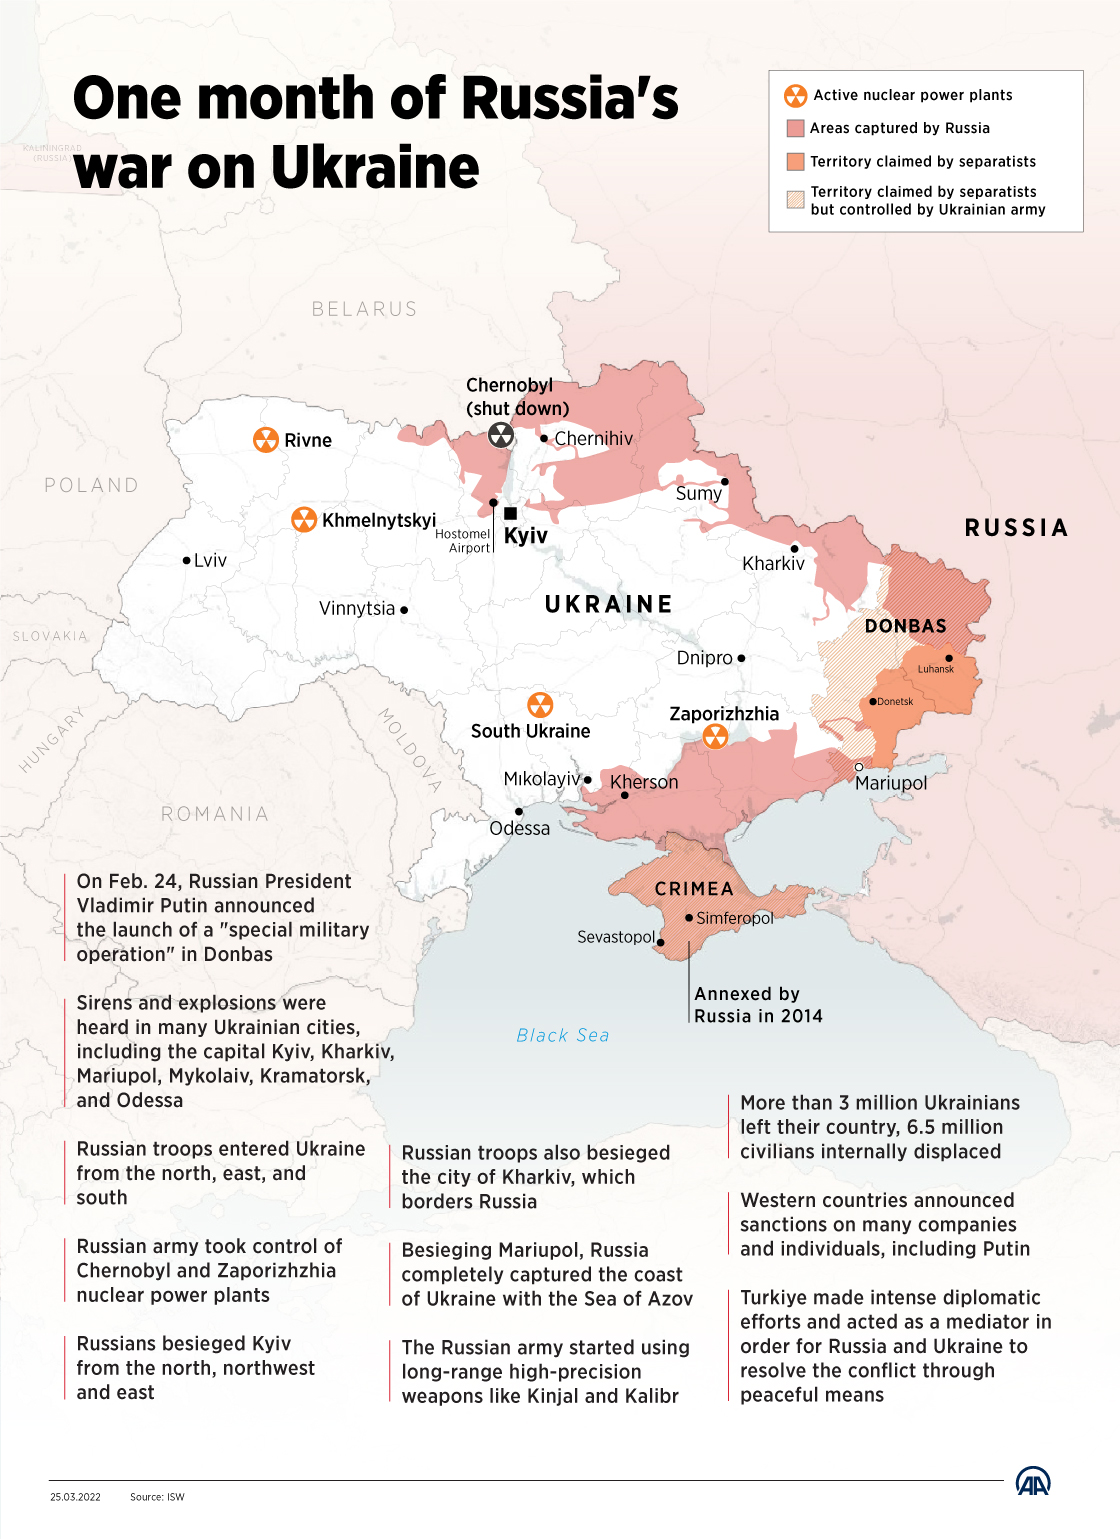 History-making war on Ukraine, one month on